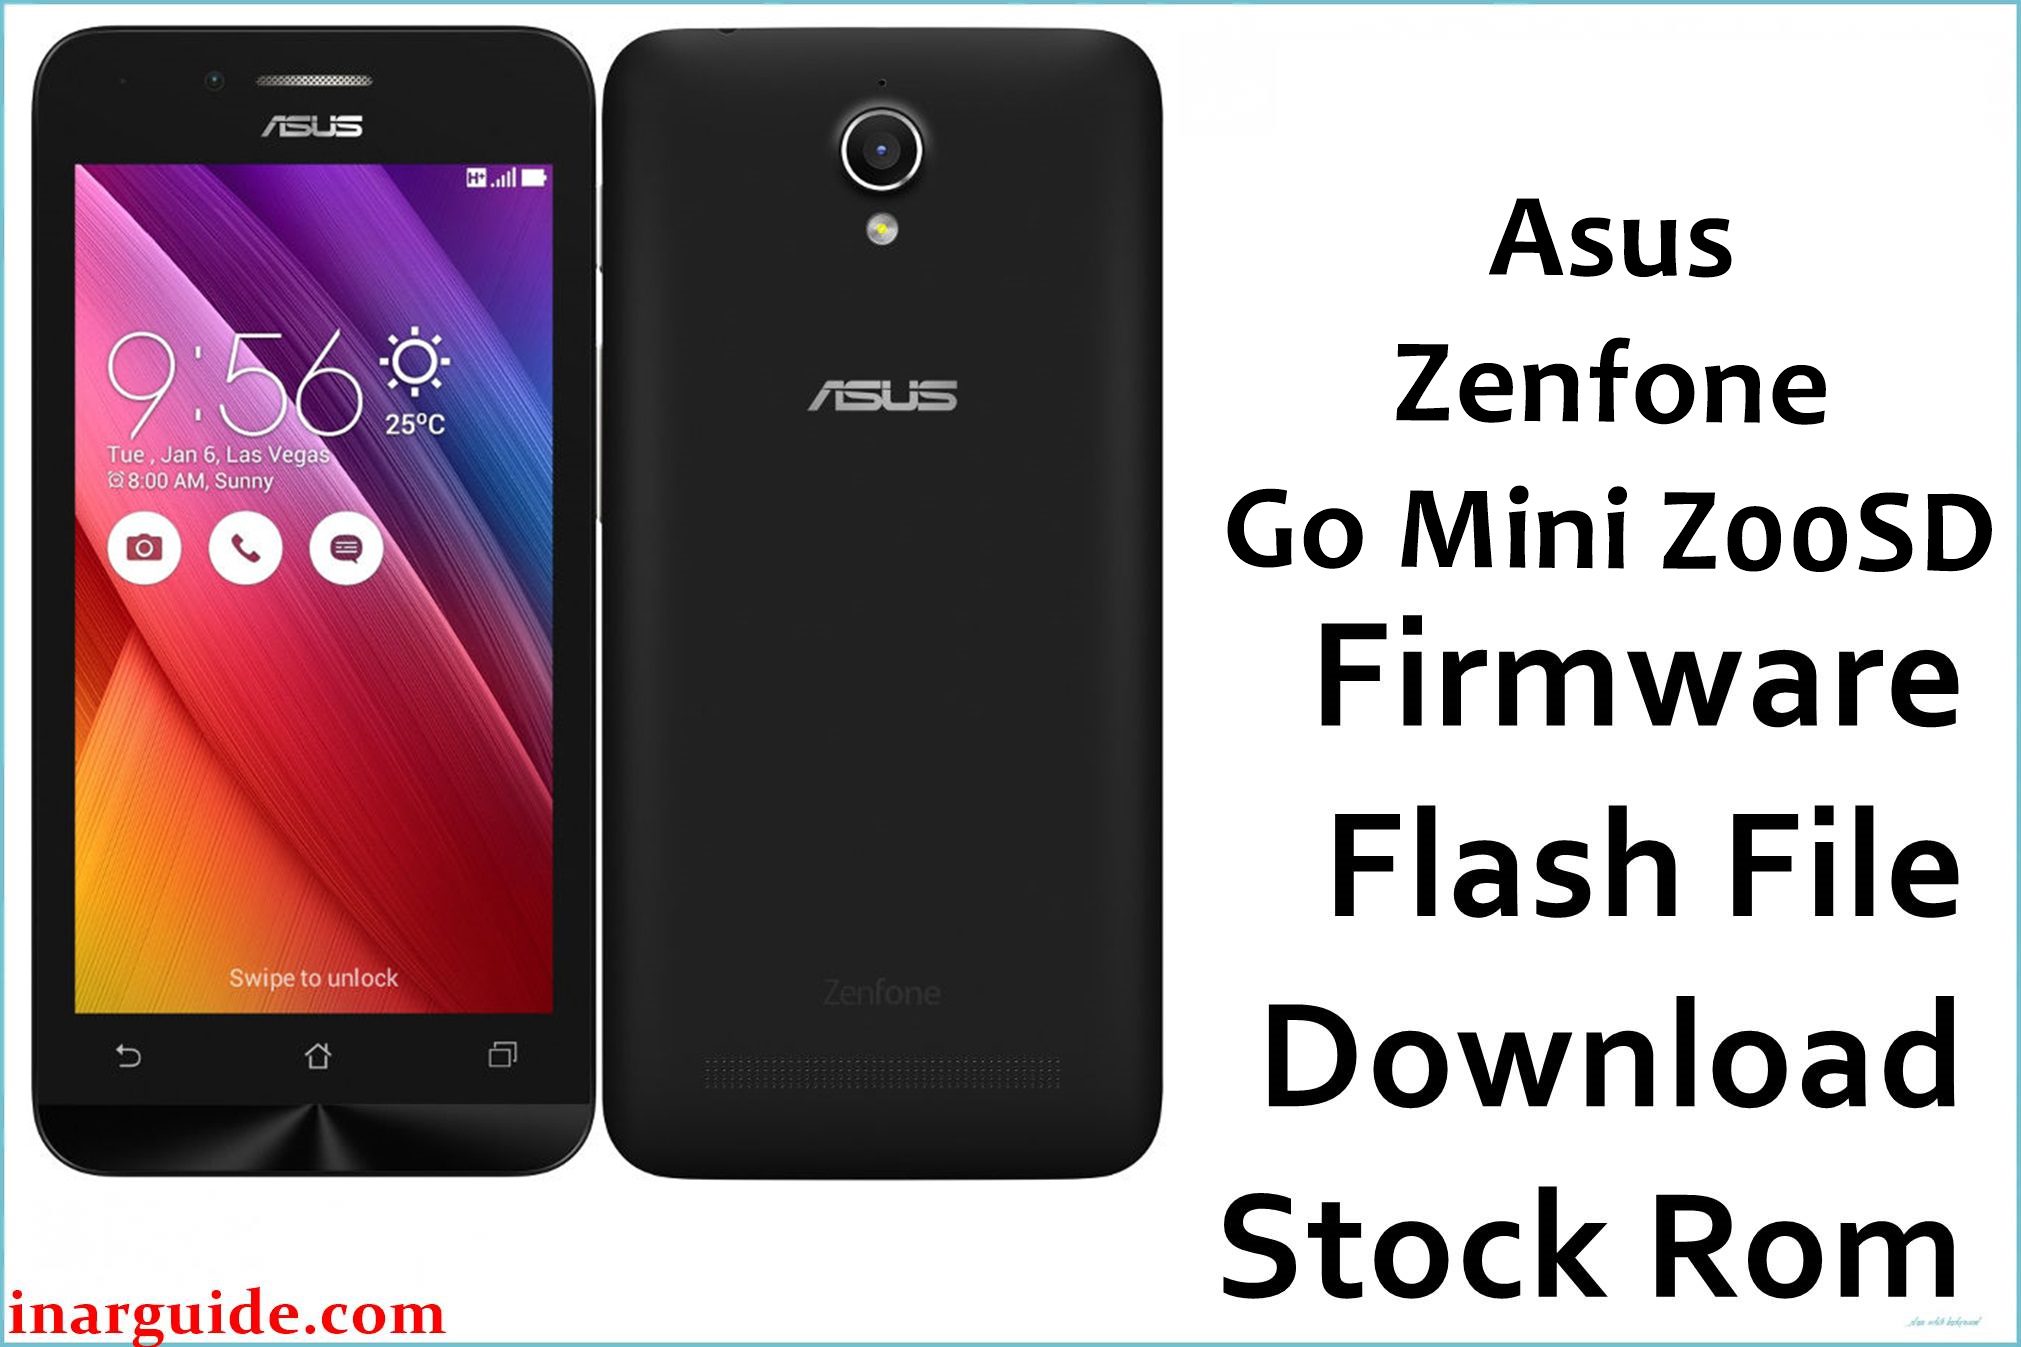 Asus Zenfone Go Mini Z00SD